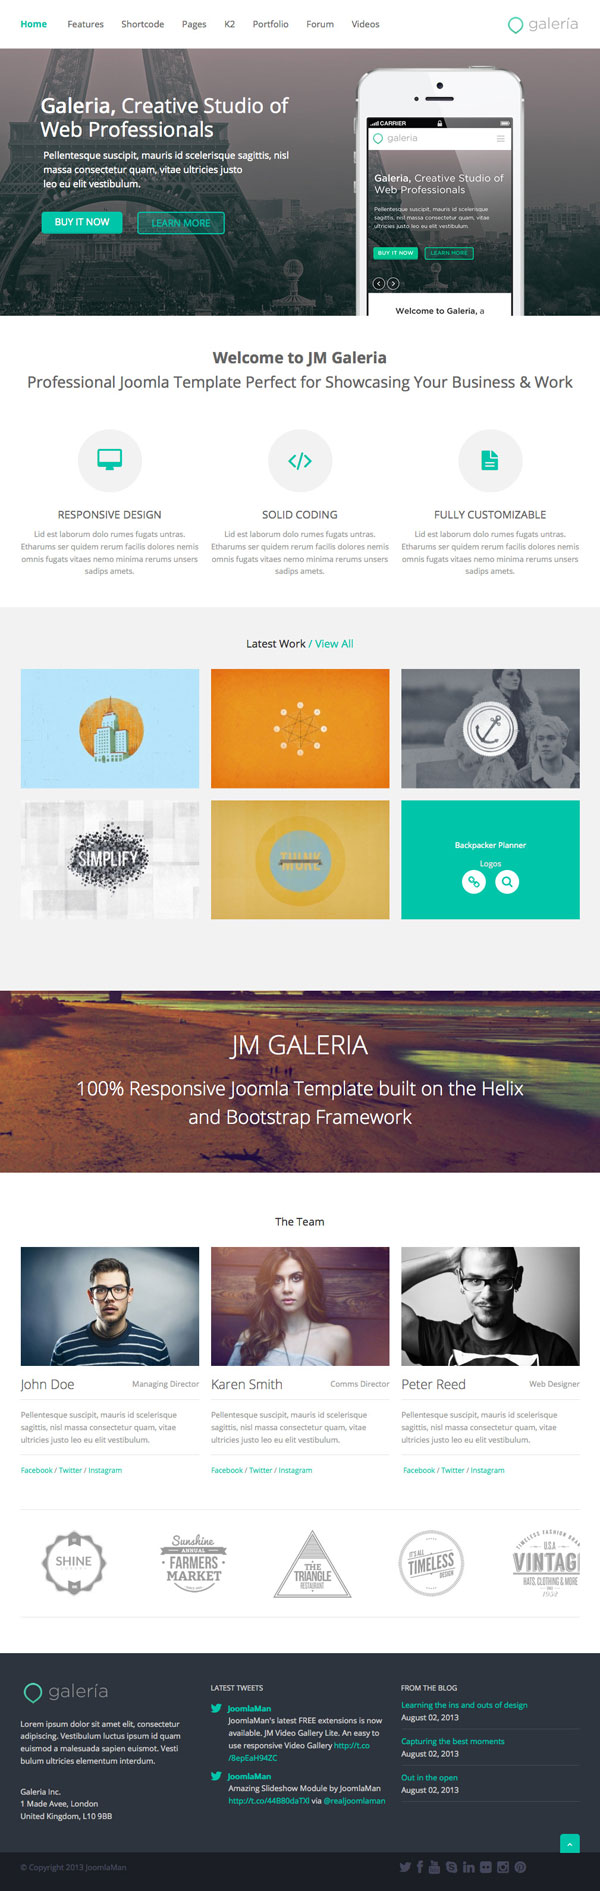 JM Galeria Responsive CMS Joomla Template - Homepage